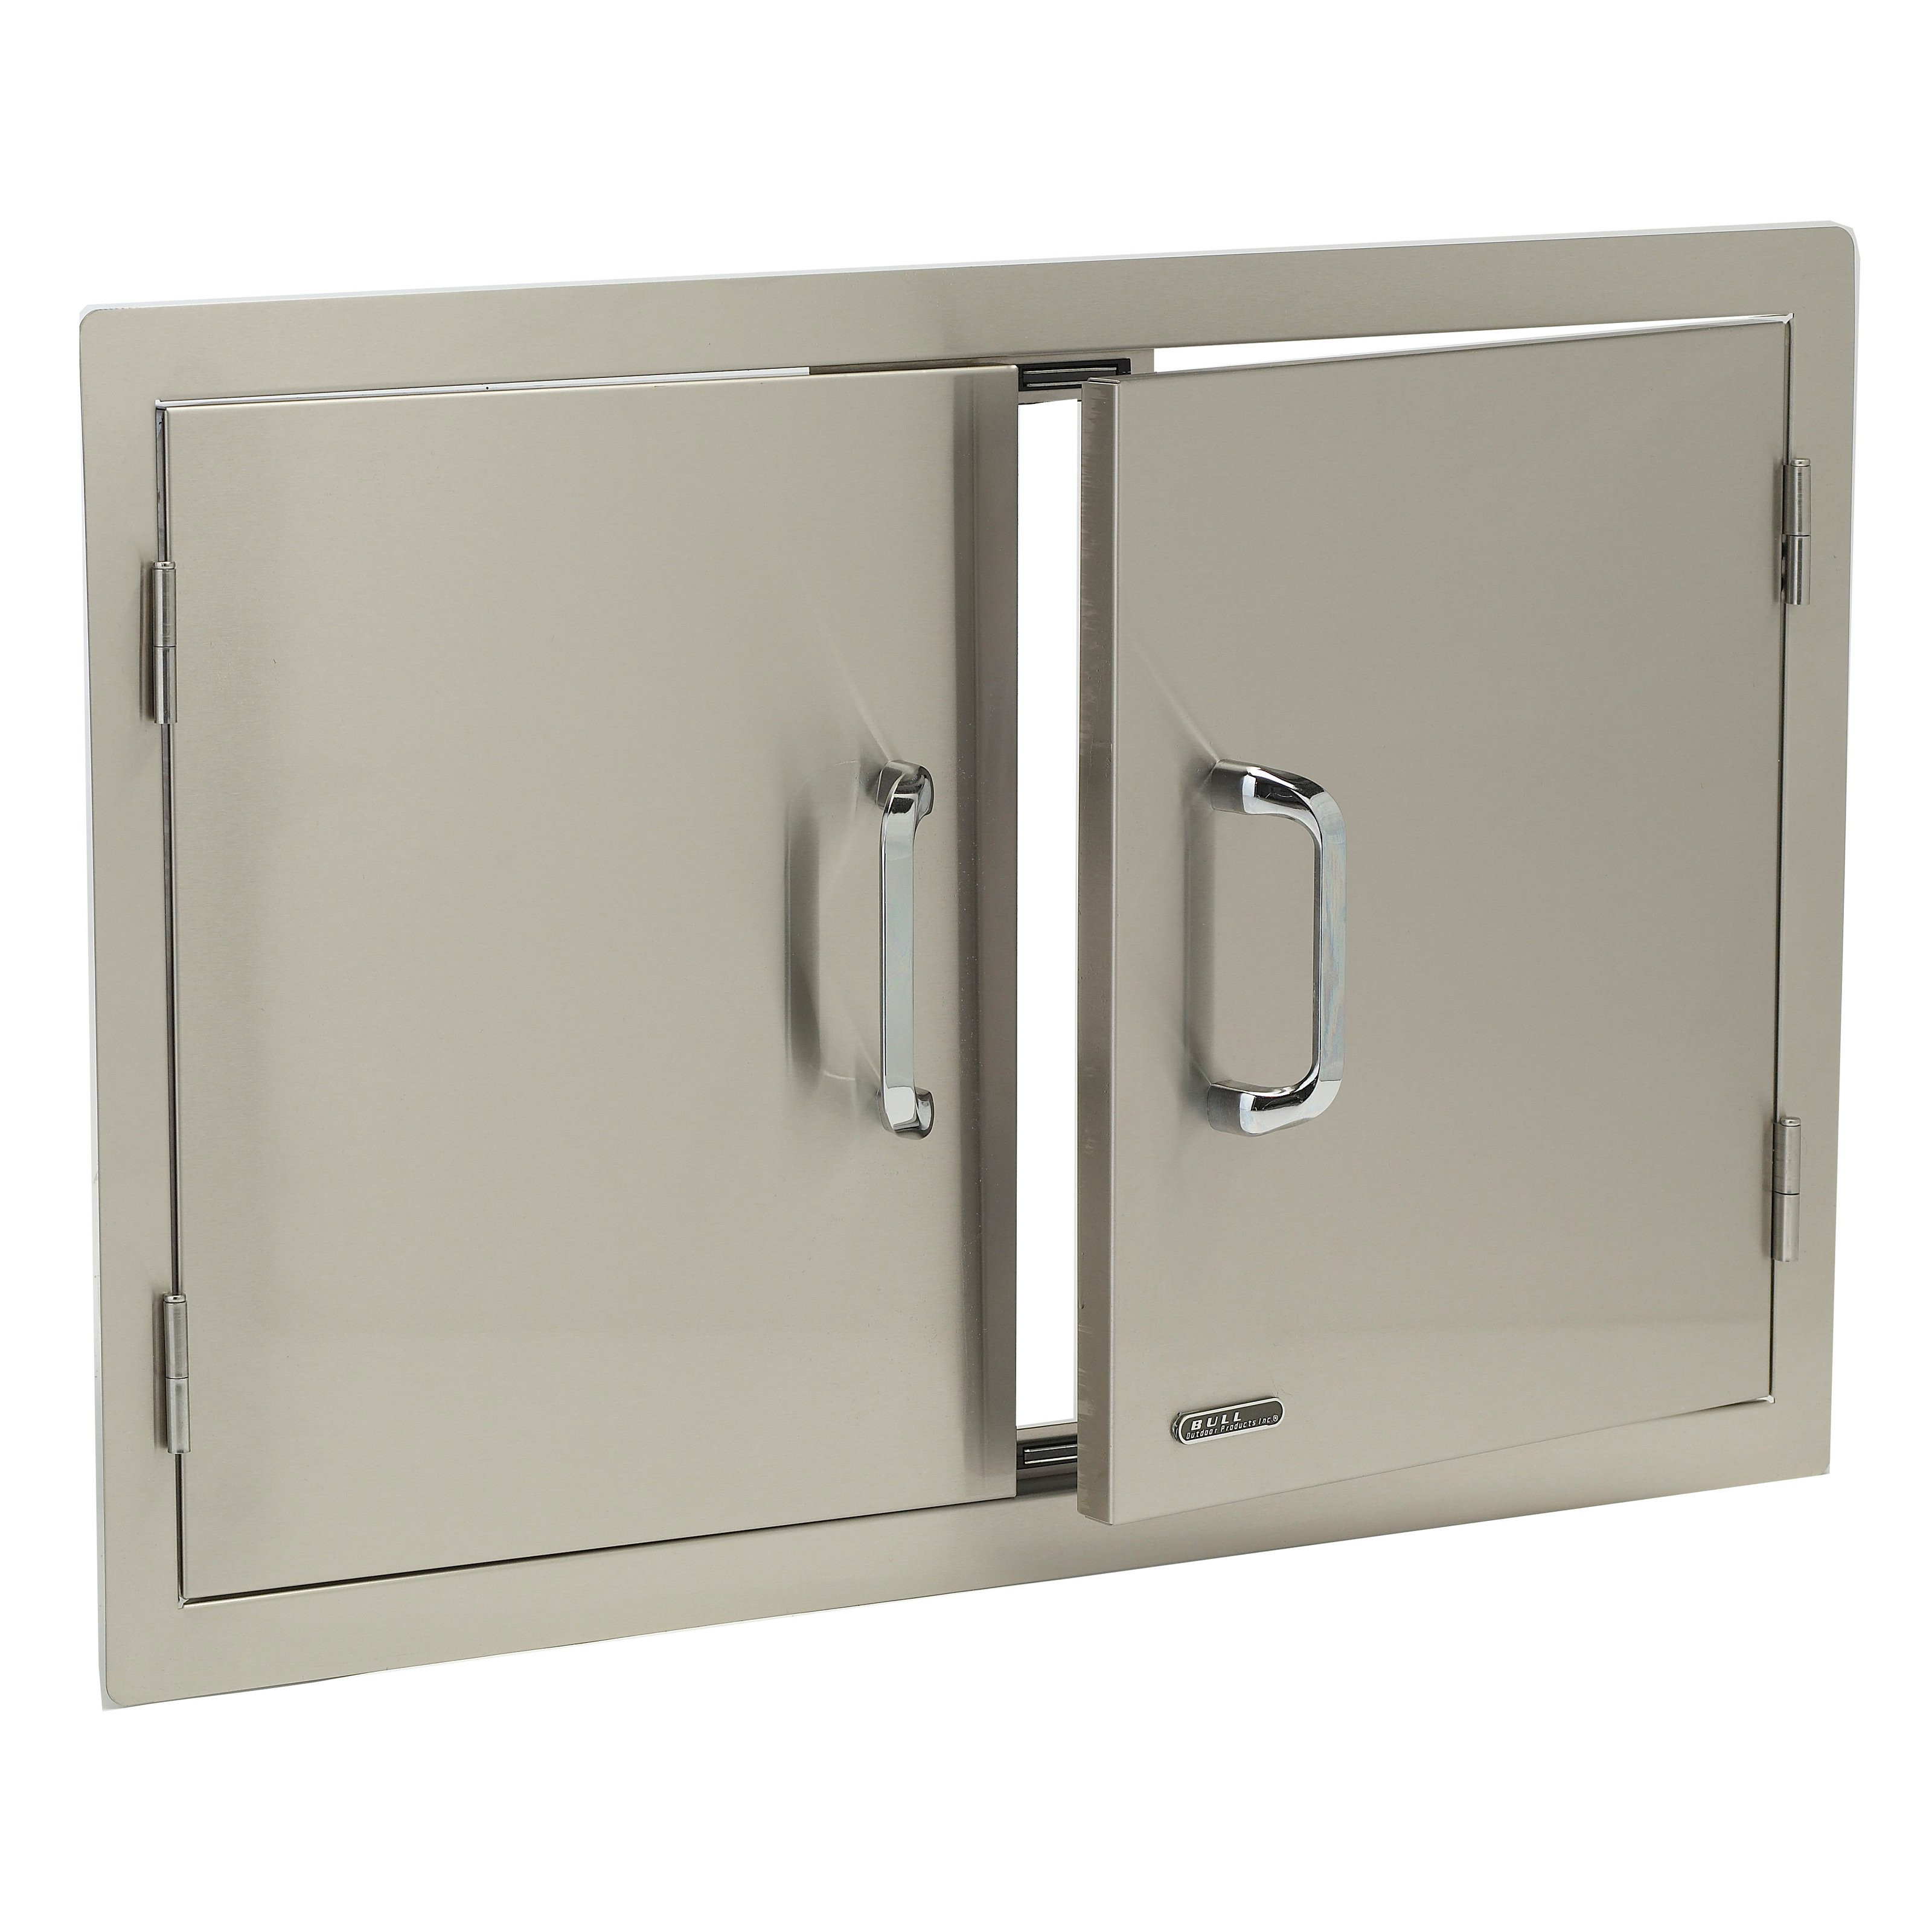 Stainless Steel Doors For Outdoor Kitchen
 Bull Stainless Steel Double Door Outdoor Kitchens at